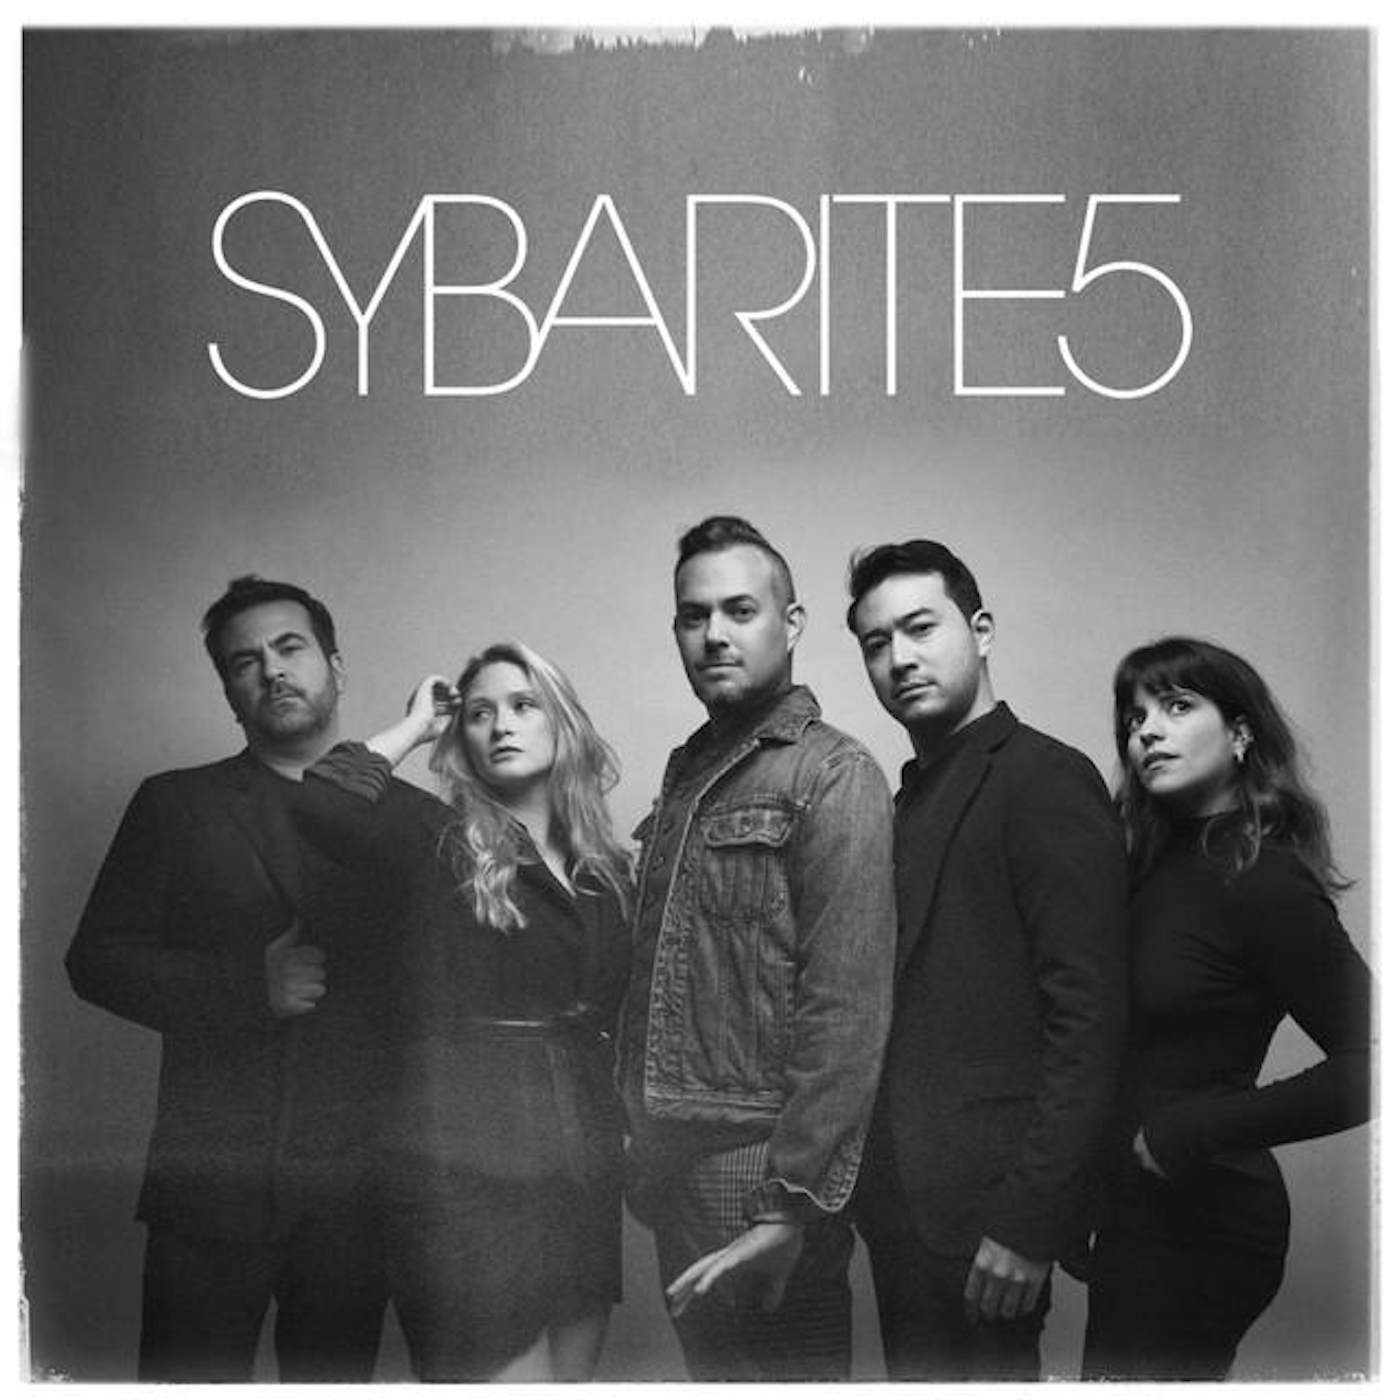 Sybarite5